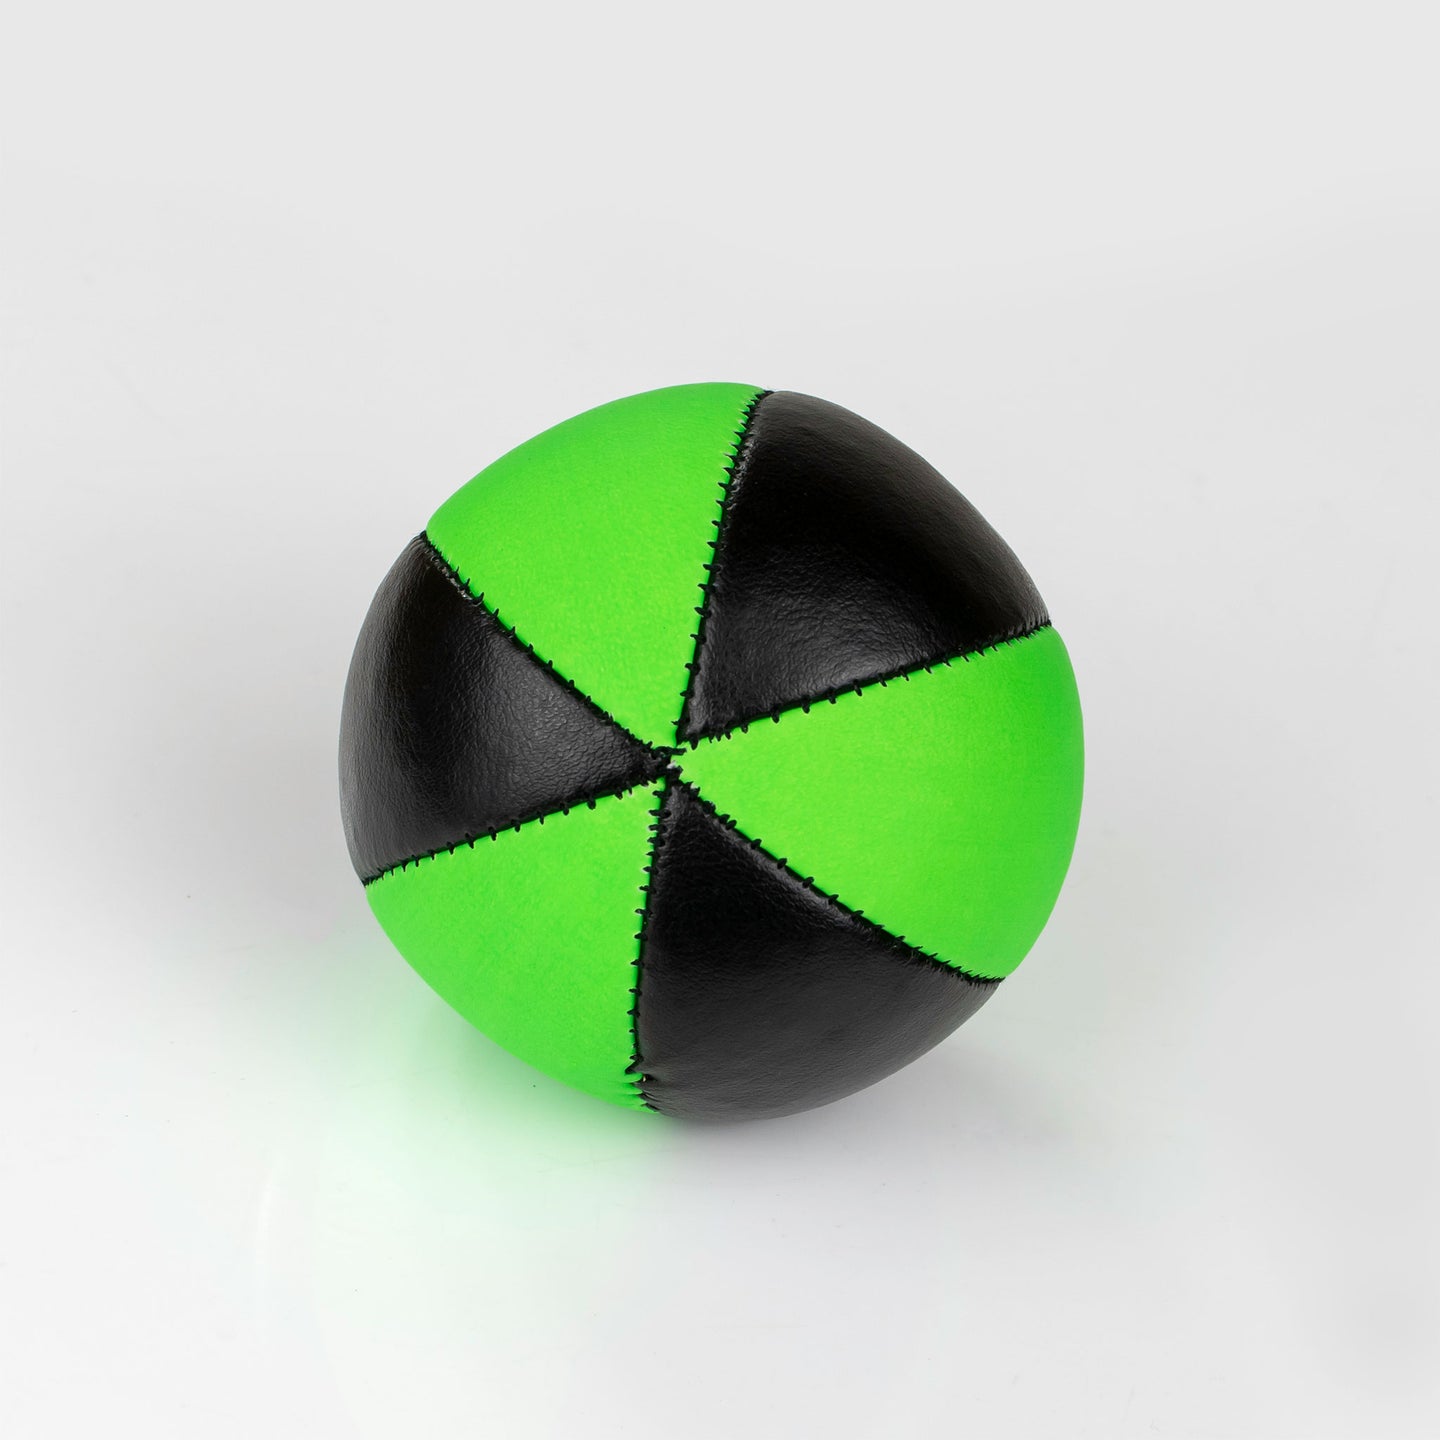 Juggle Dream Pro Star 6-Panel Juggling Ball - UV Green / Black